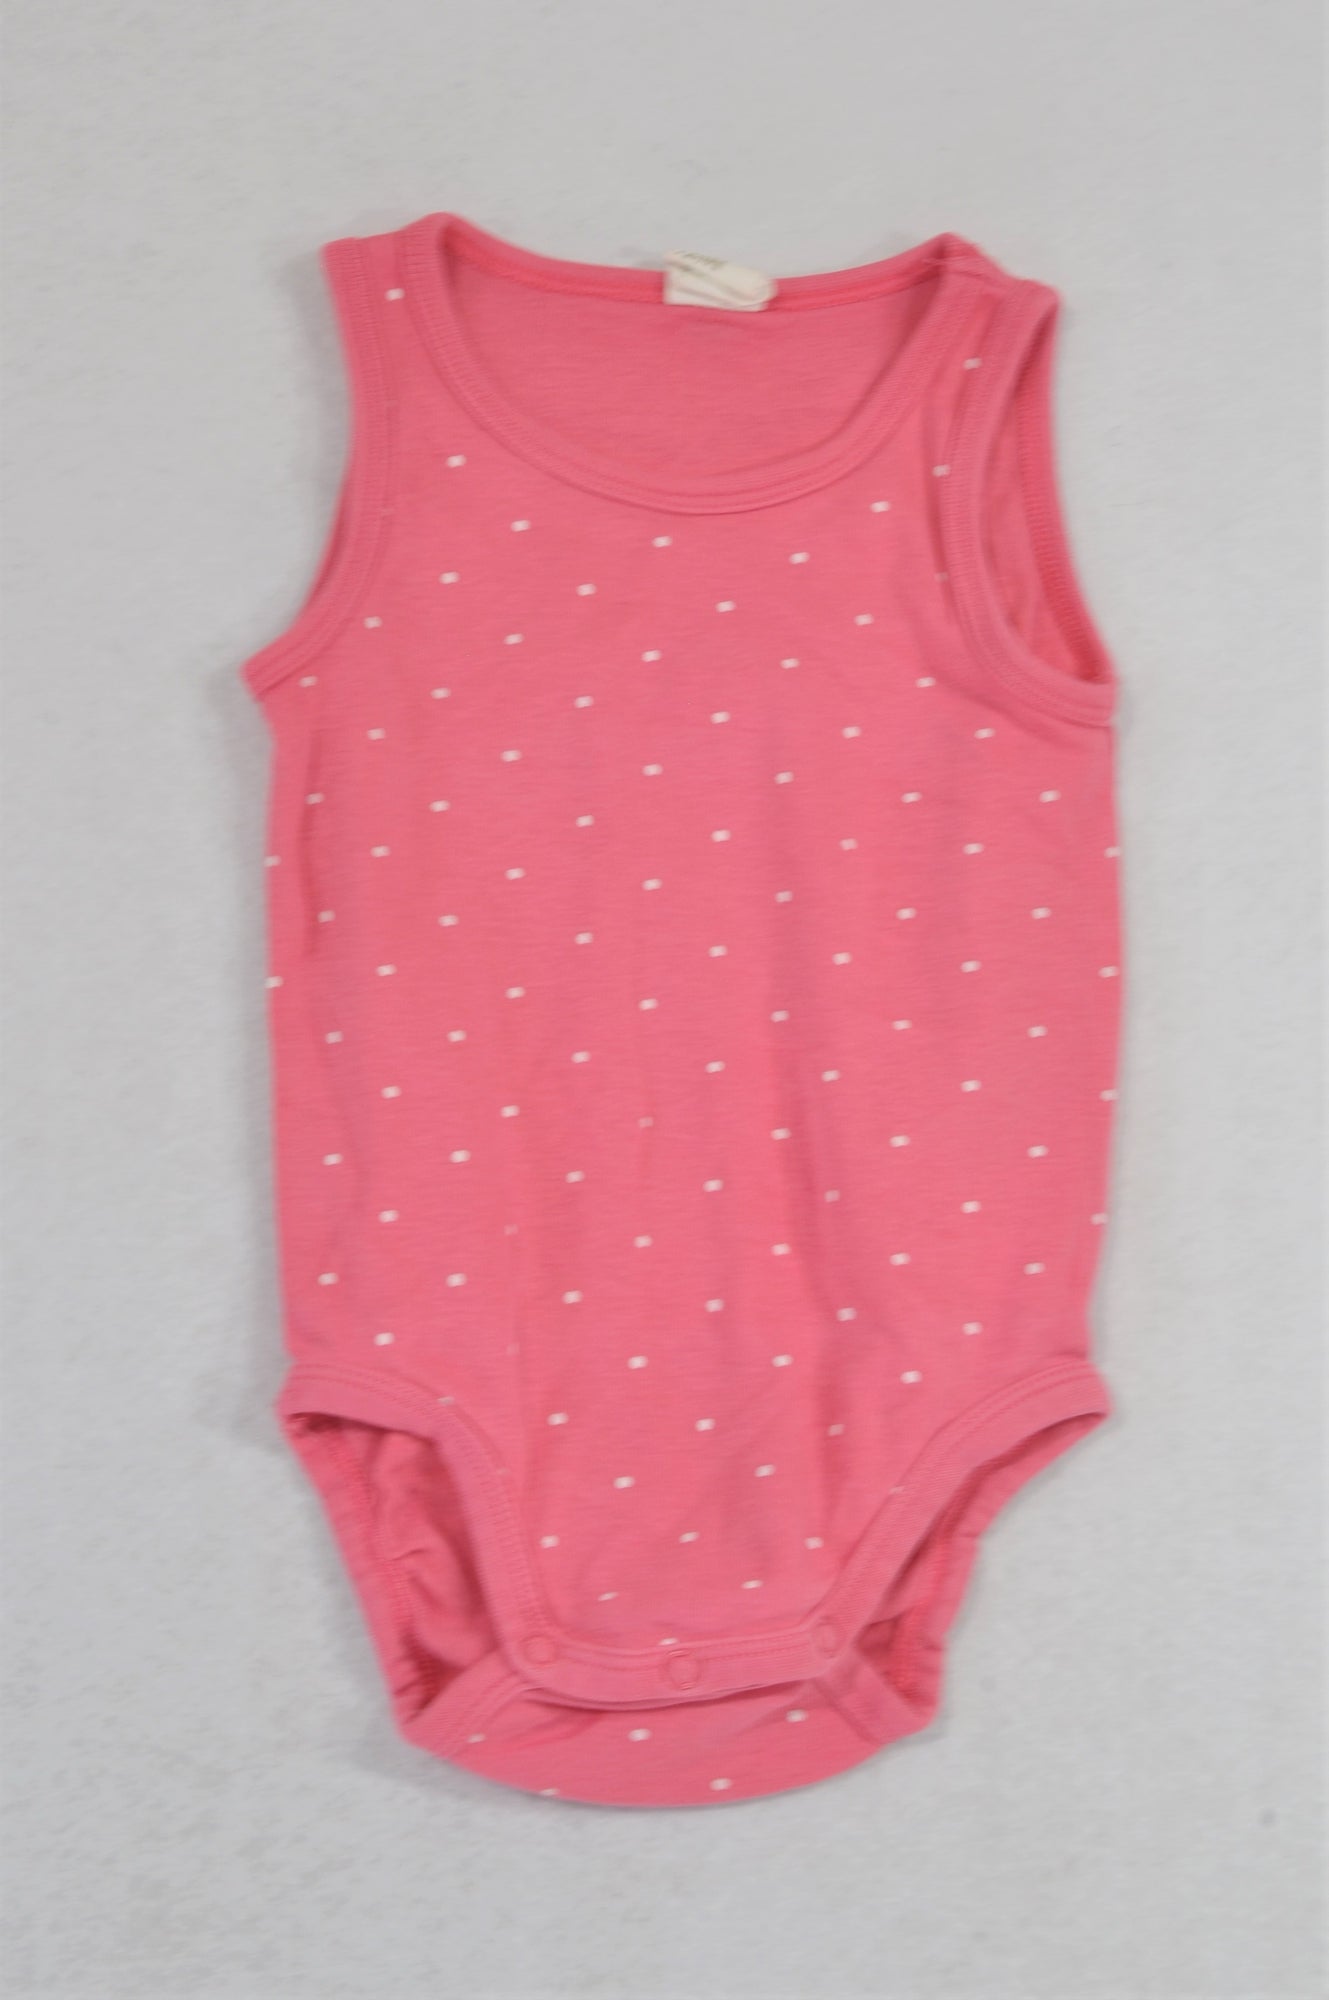 h&m infant girl clothes